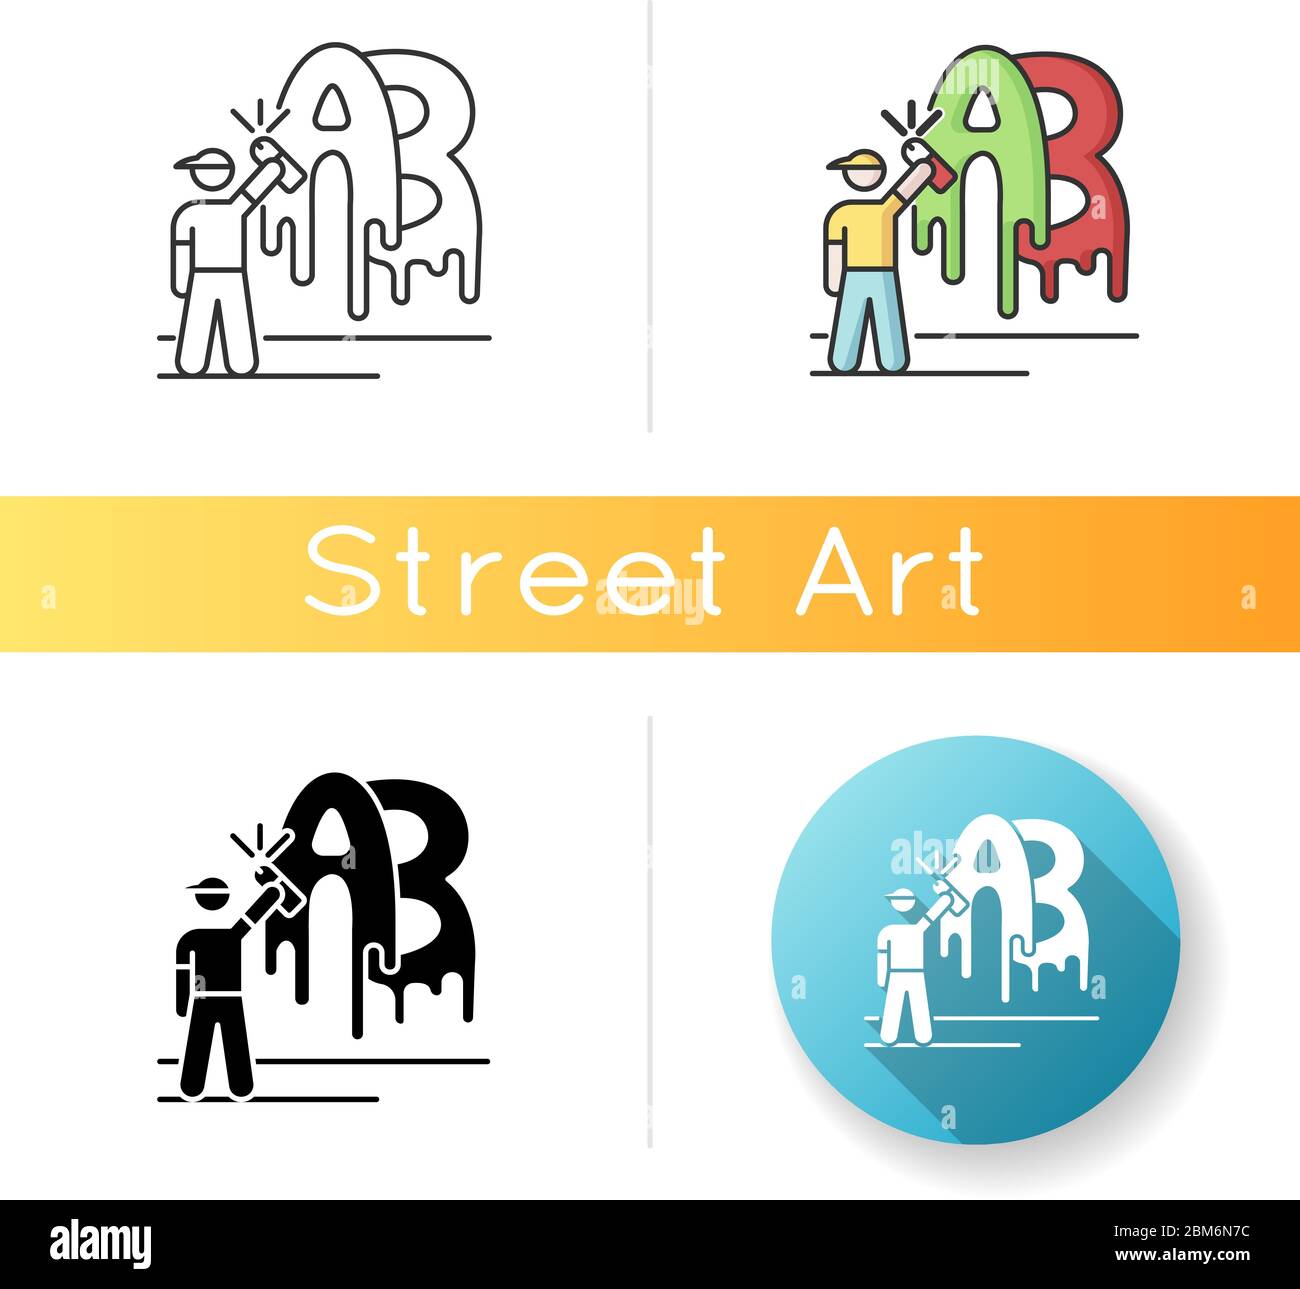 Street art icon Stock Vector